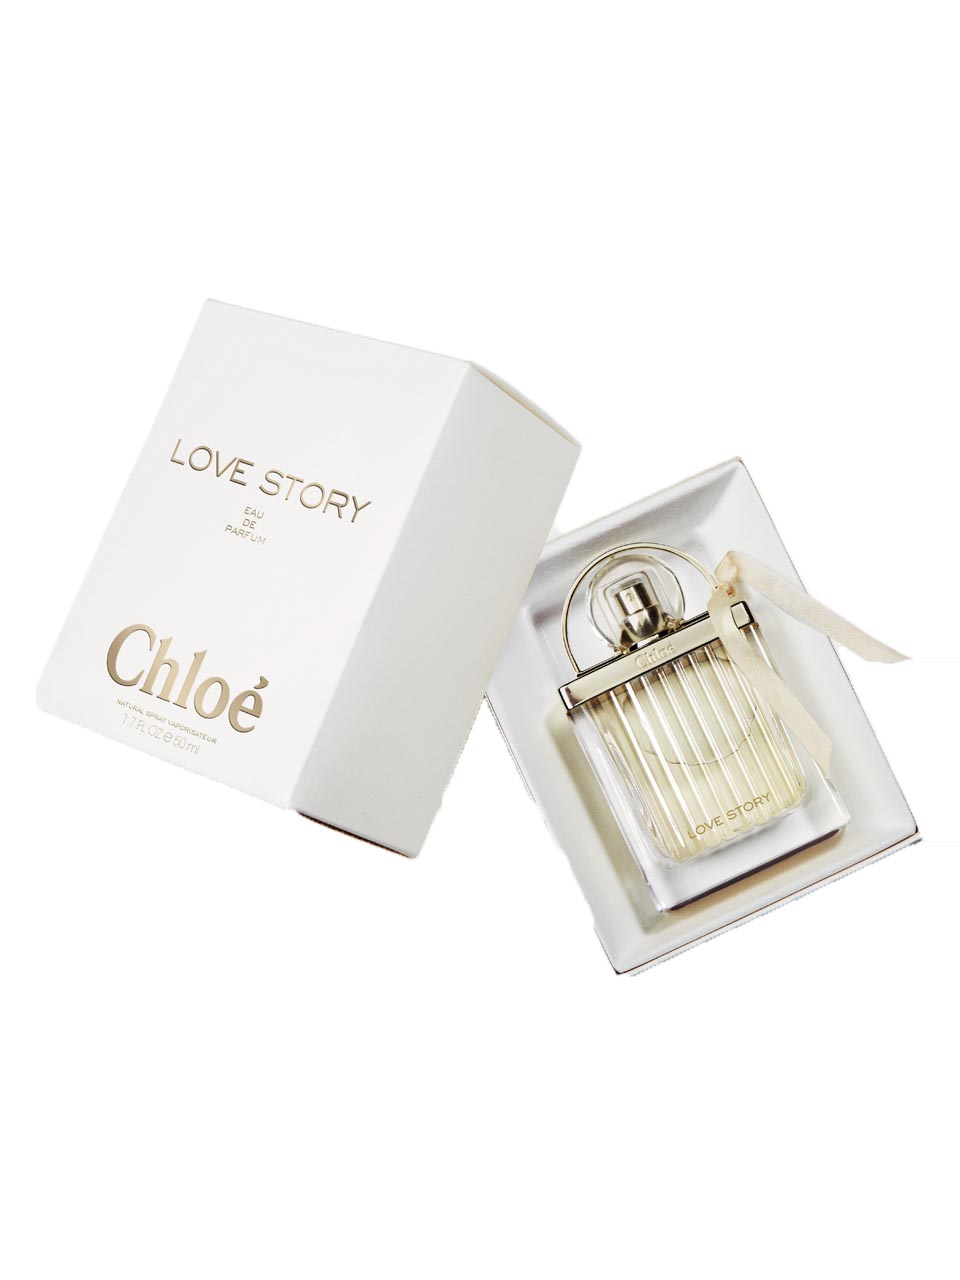 Chloé Love Story Eau de Parfum 50 ml null - onesize - 1